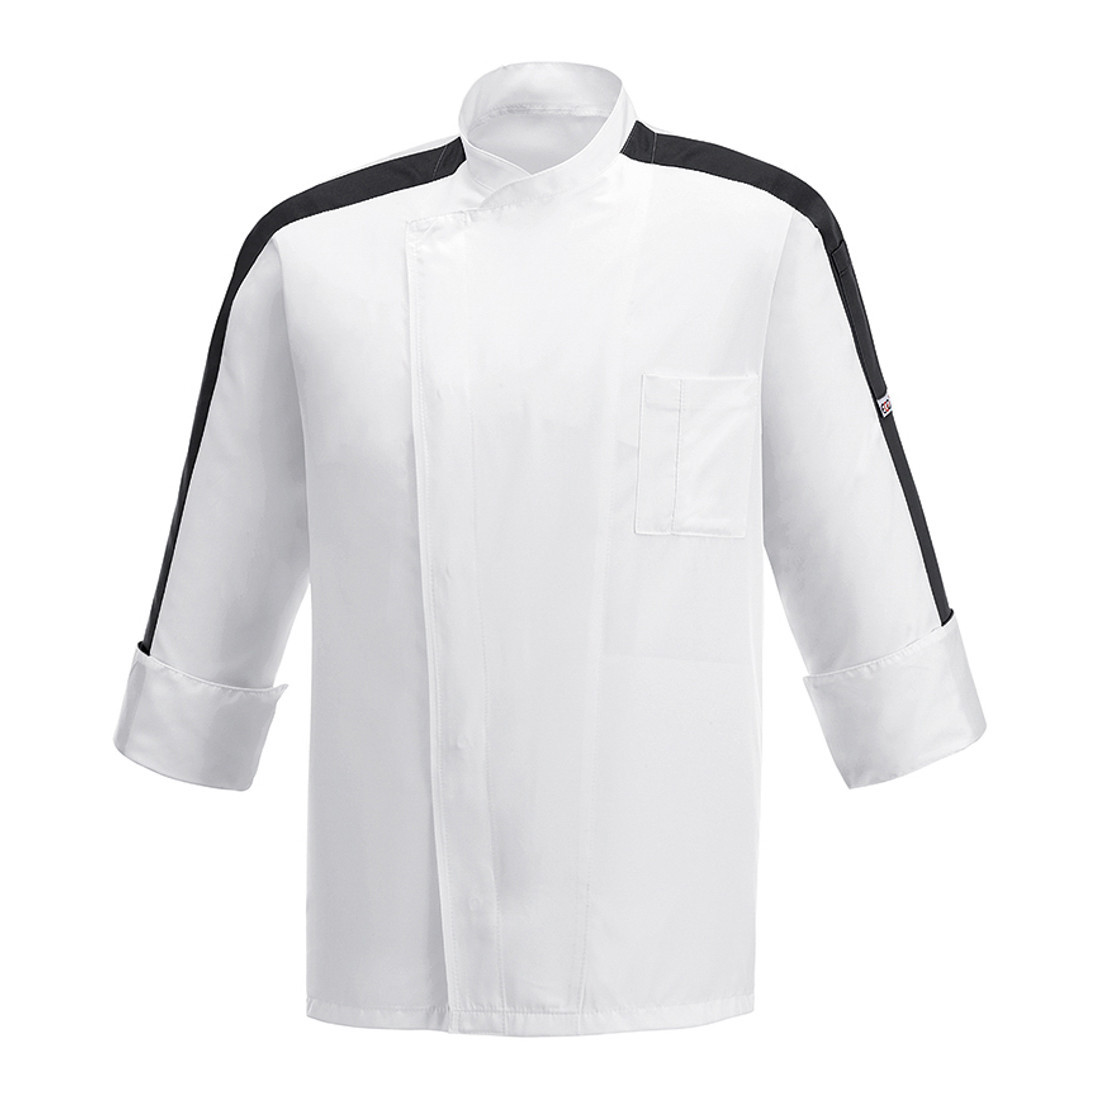 Ribbon Chef's Jacket - Safetywear